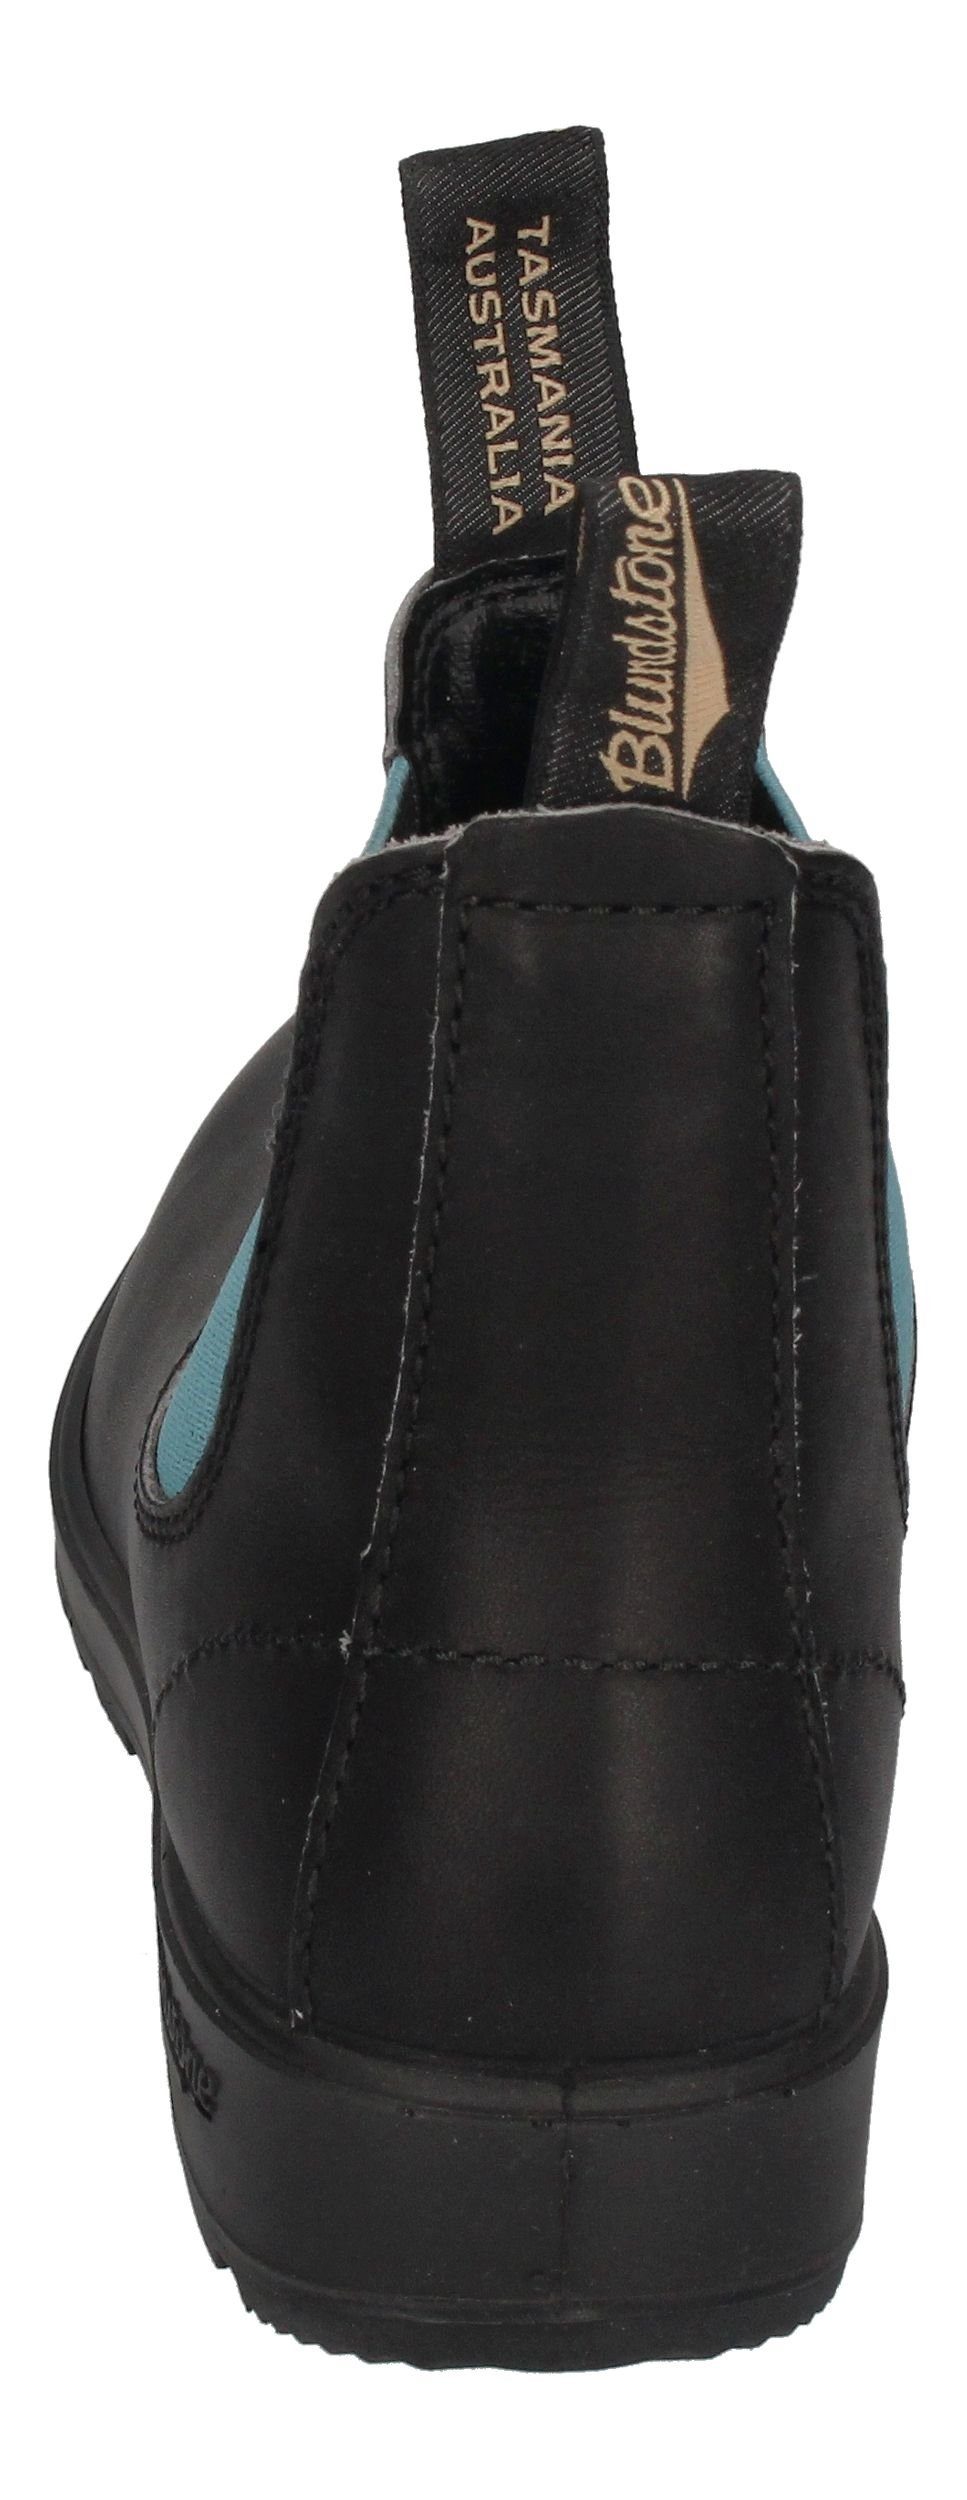 Chelseaboots Black Series 500 Teal BLU2207-001 Original Leather Blundstone Elastic with